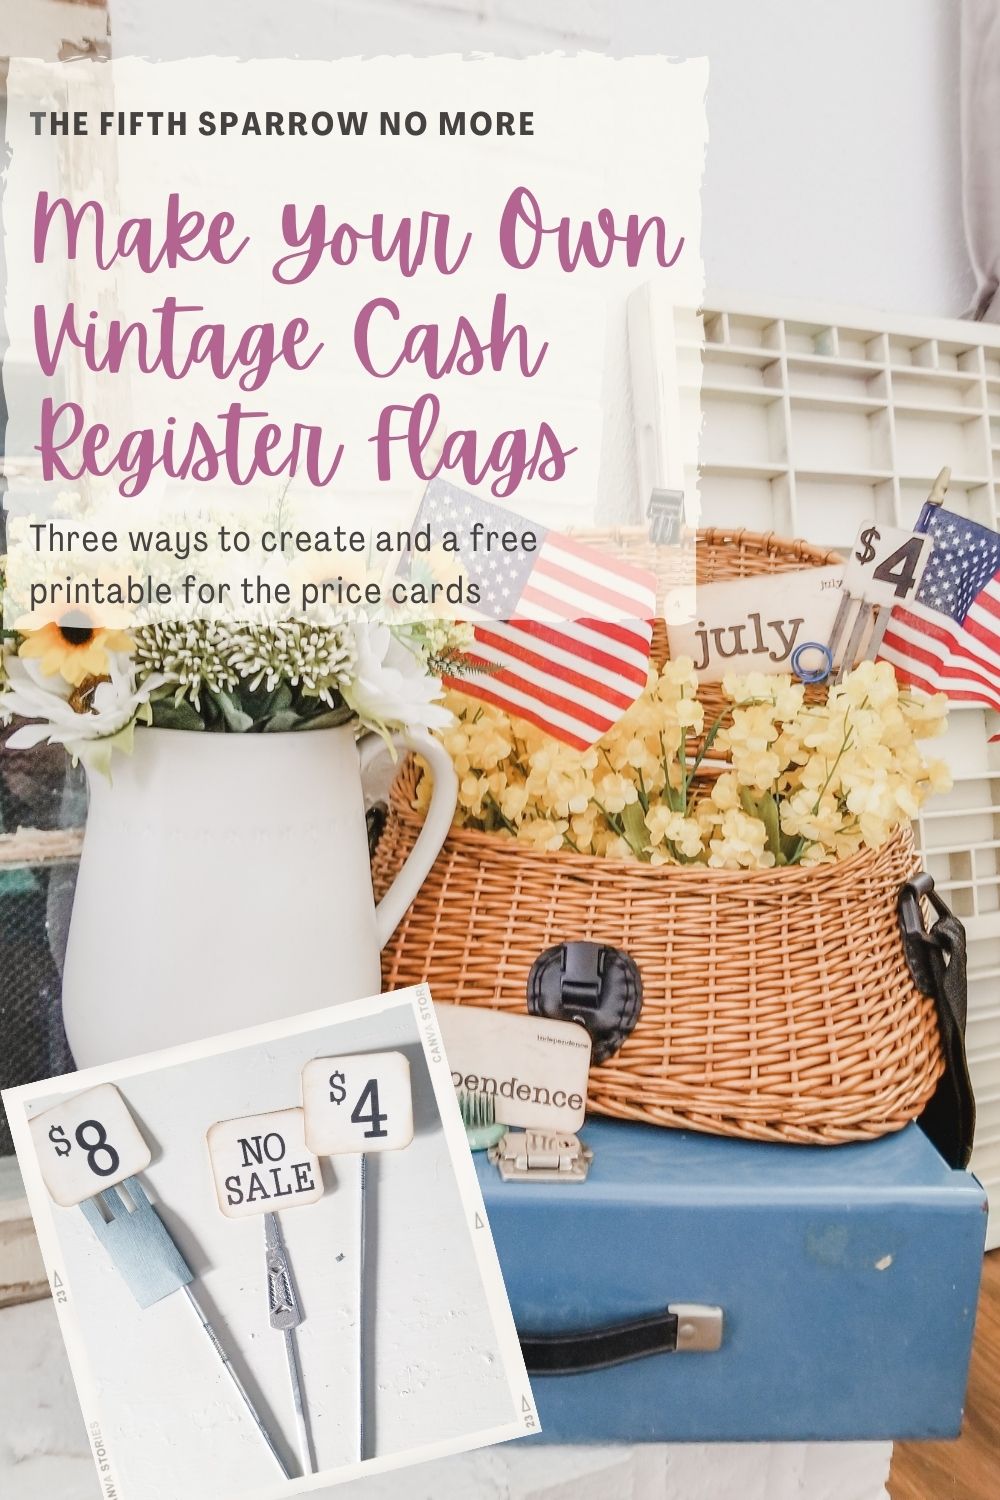 Supplies to recreate vintage cash register flags